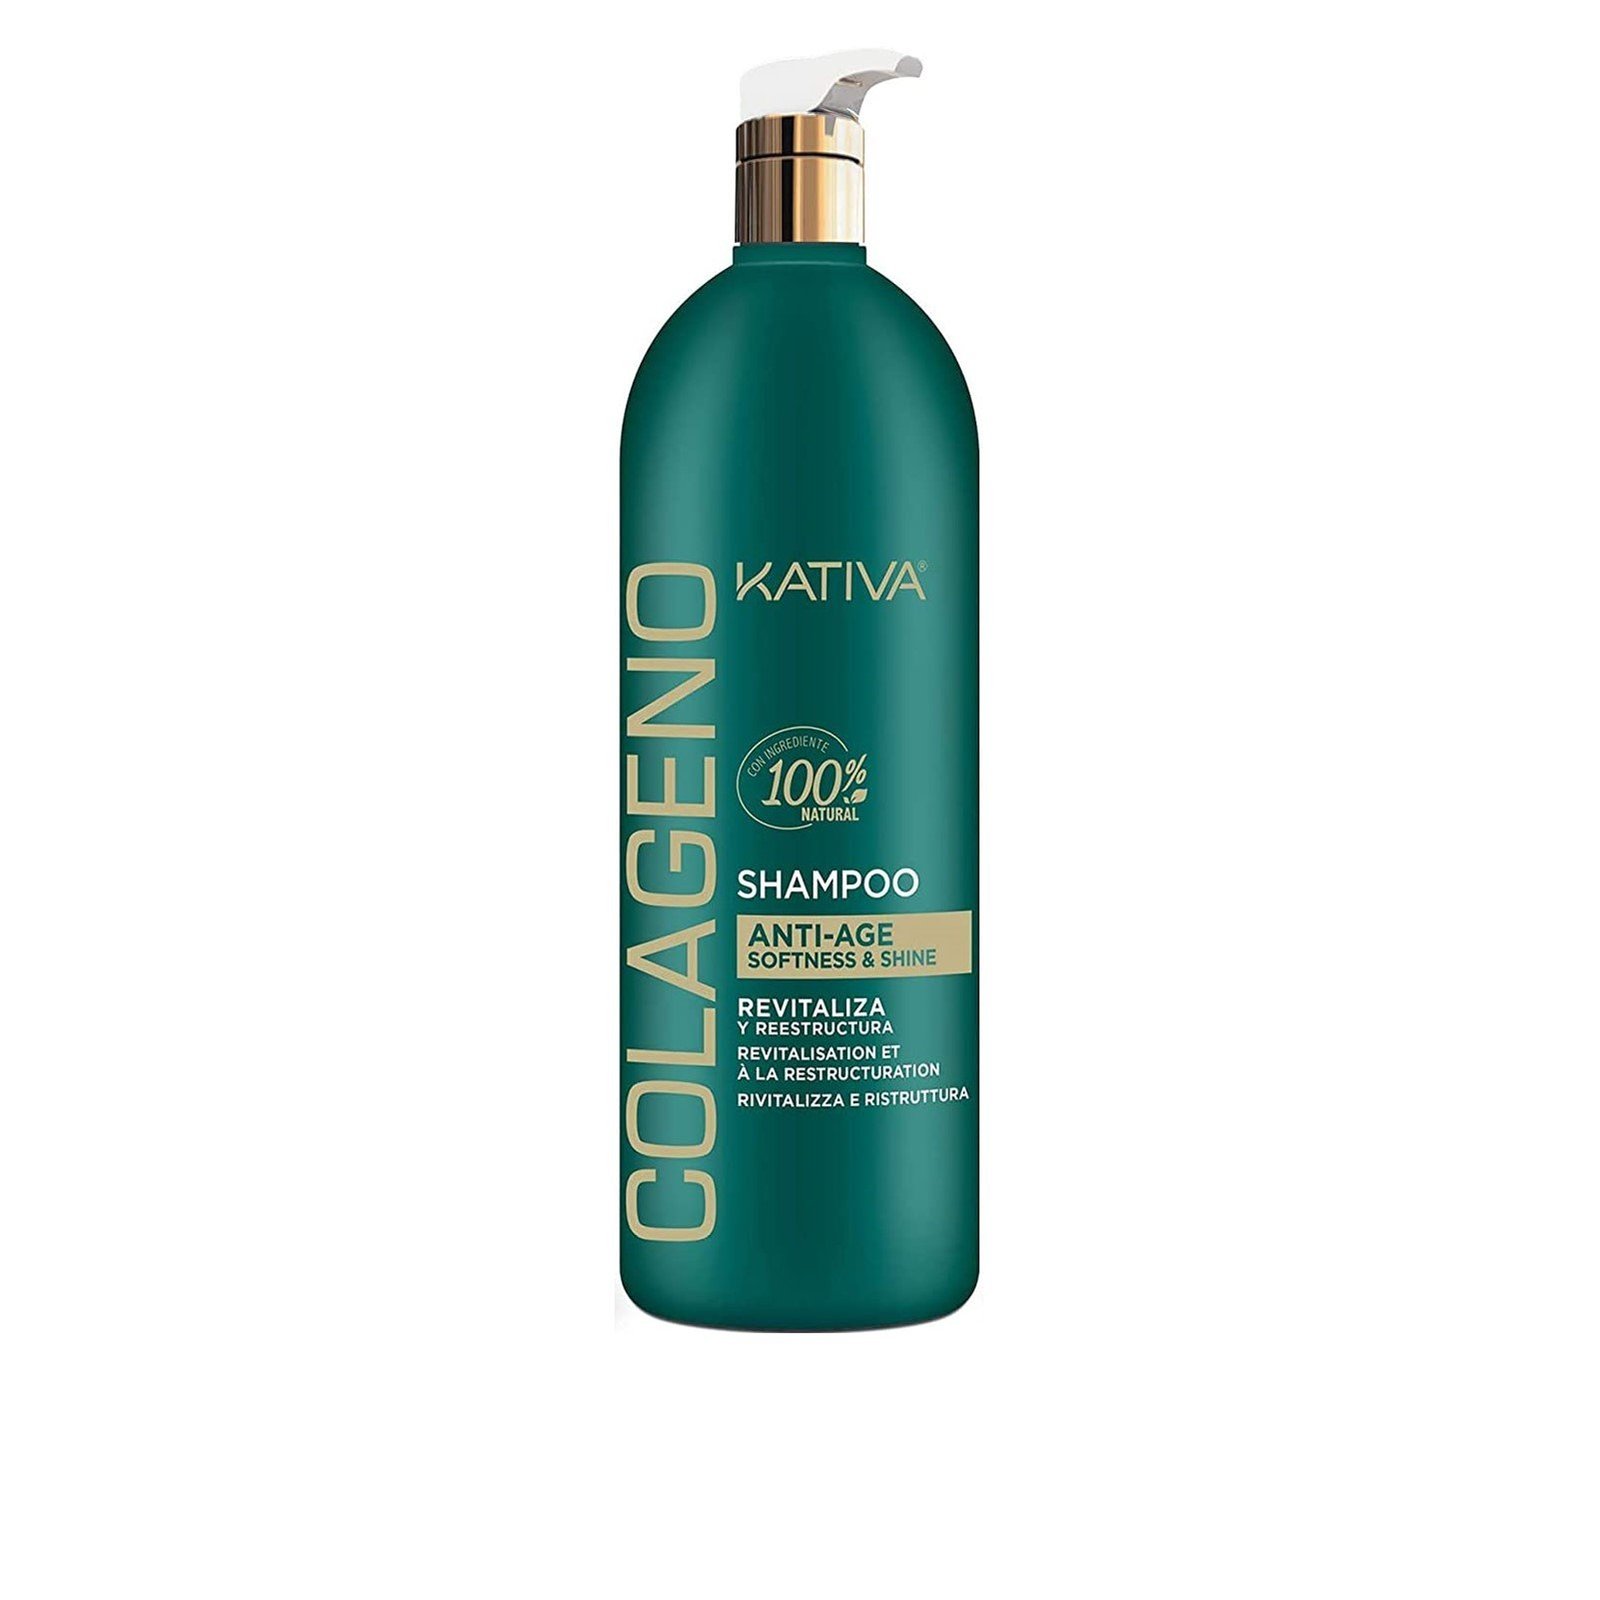 Kativa Collagen Anti-Age Softness & Shine Shampoo 1L